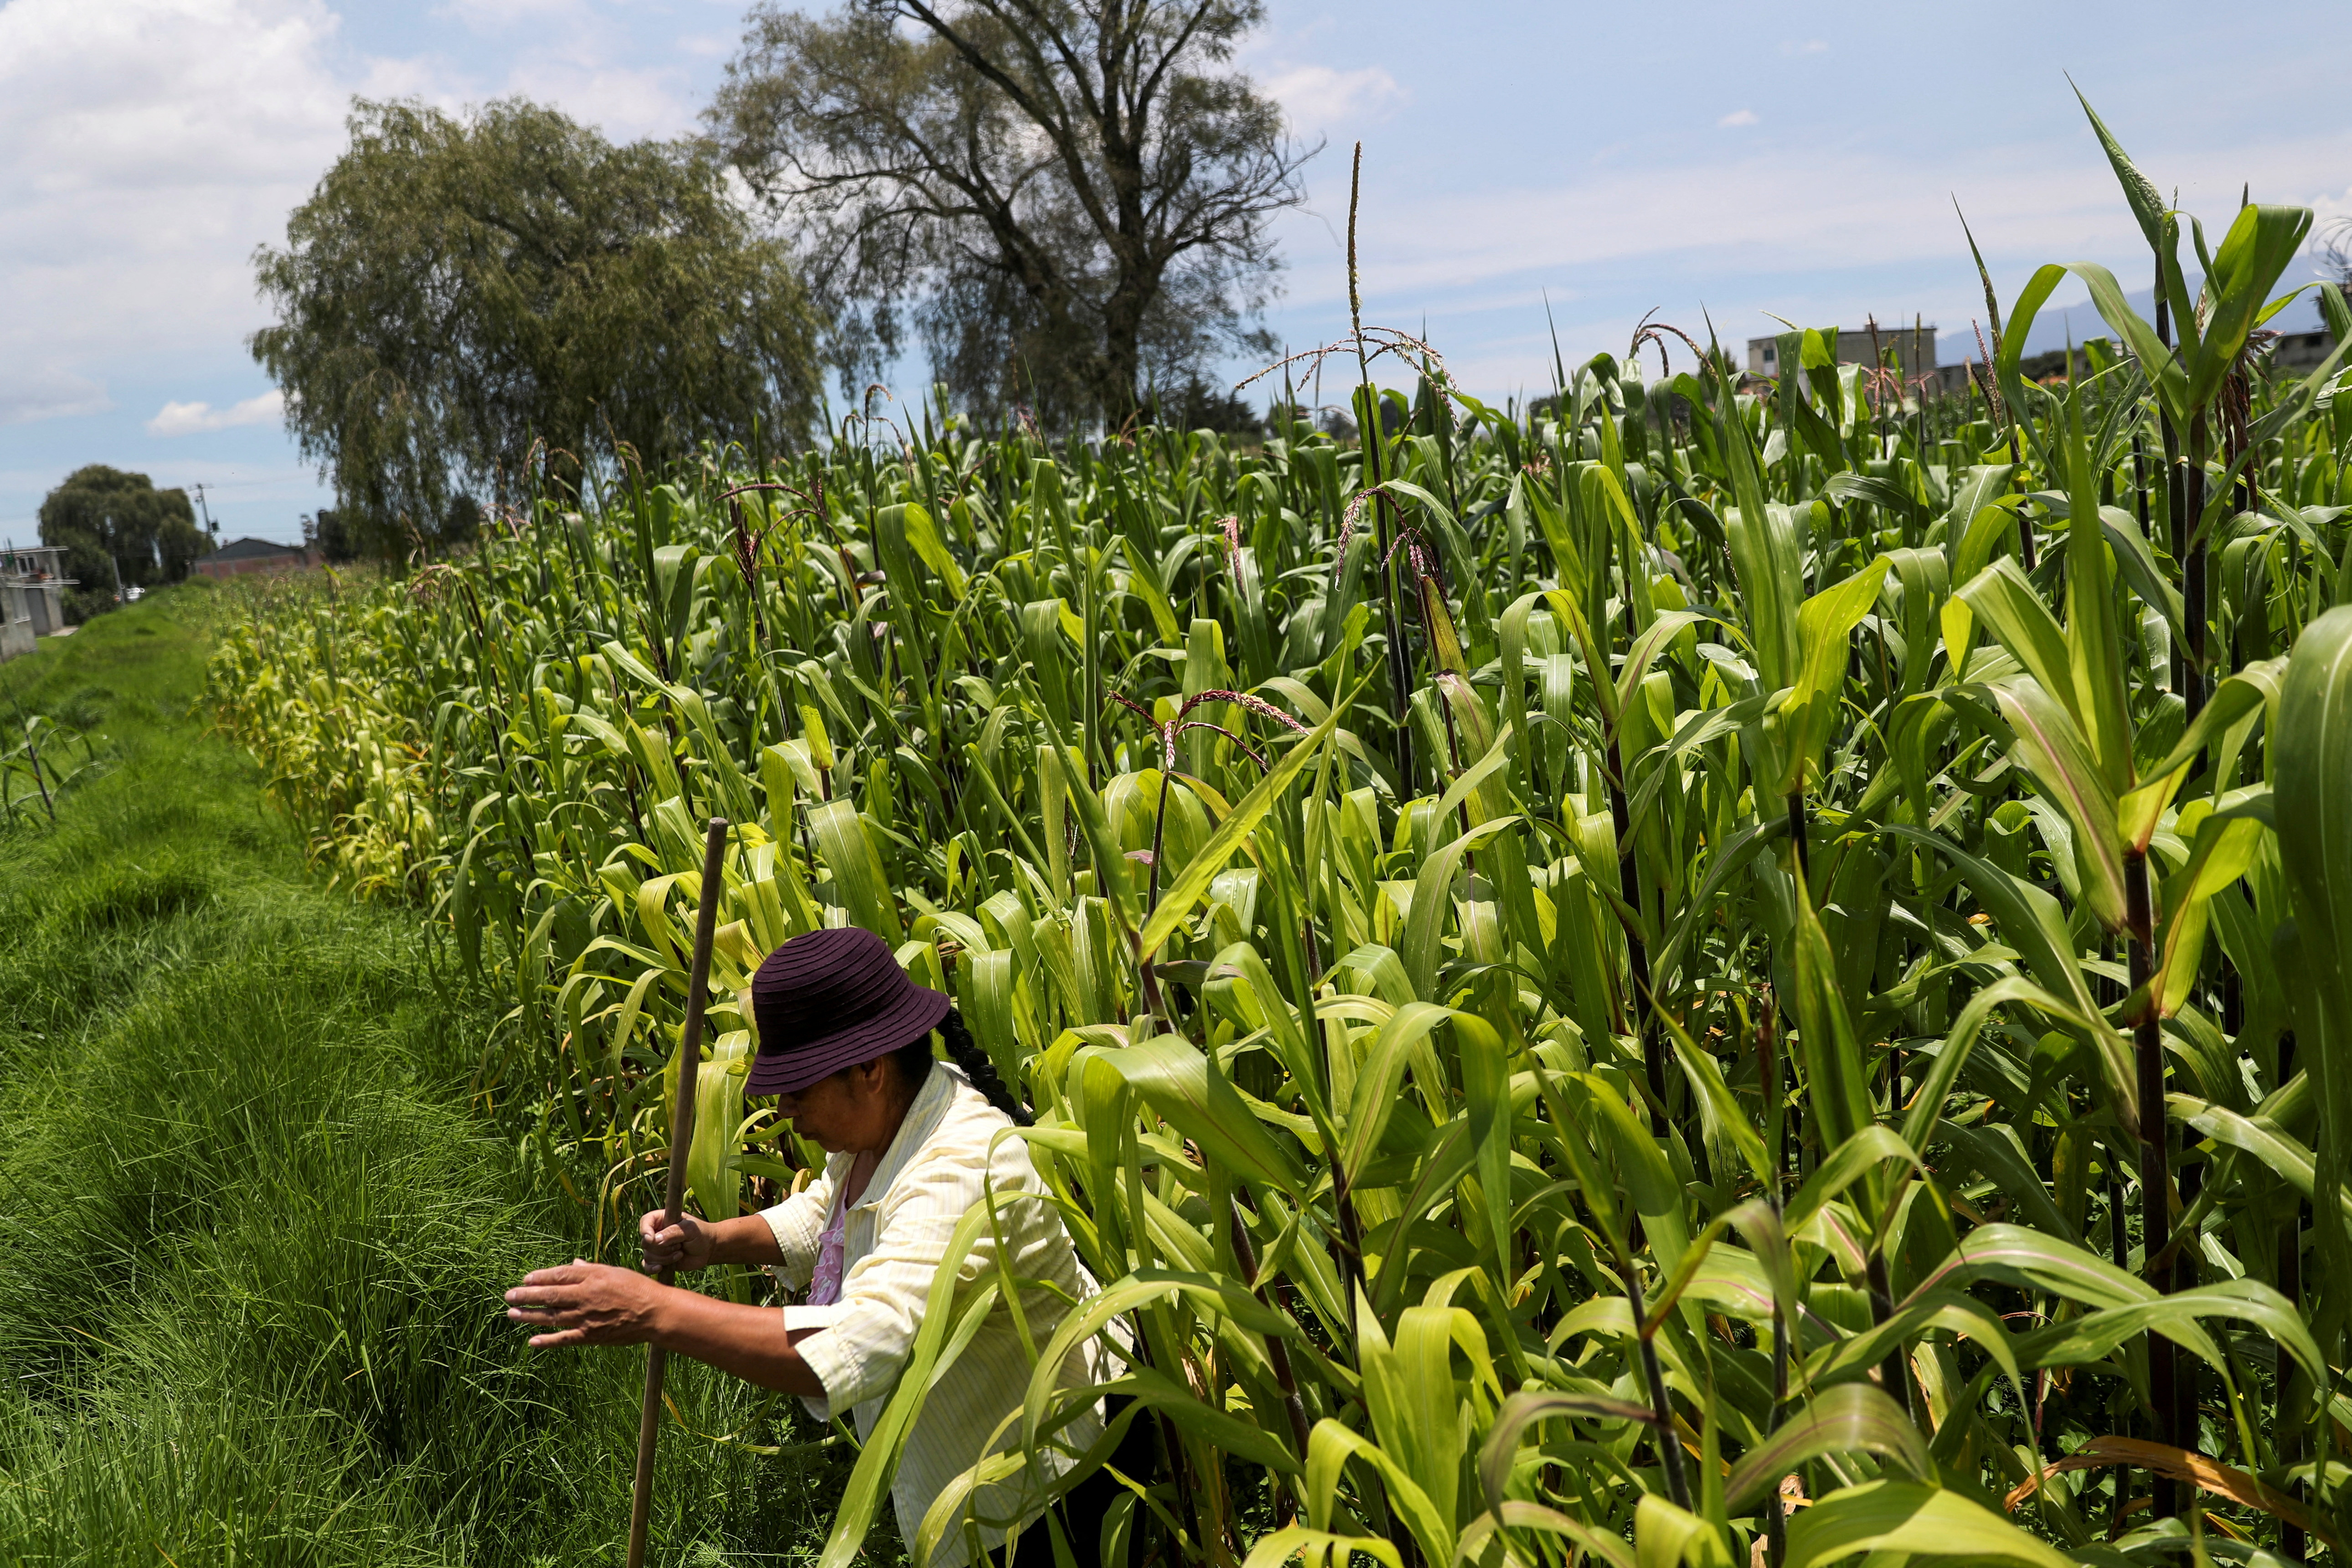 U.S. farmers ramp up pressure on Mexico to soften GMO corn ban